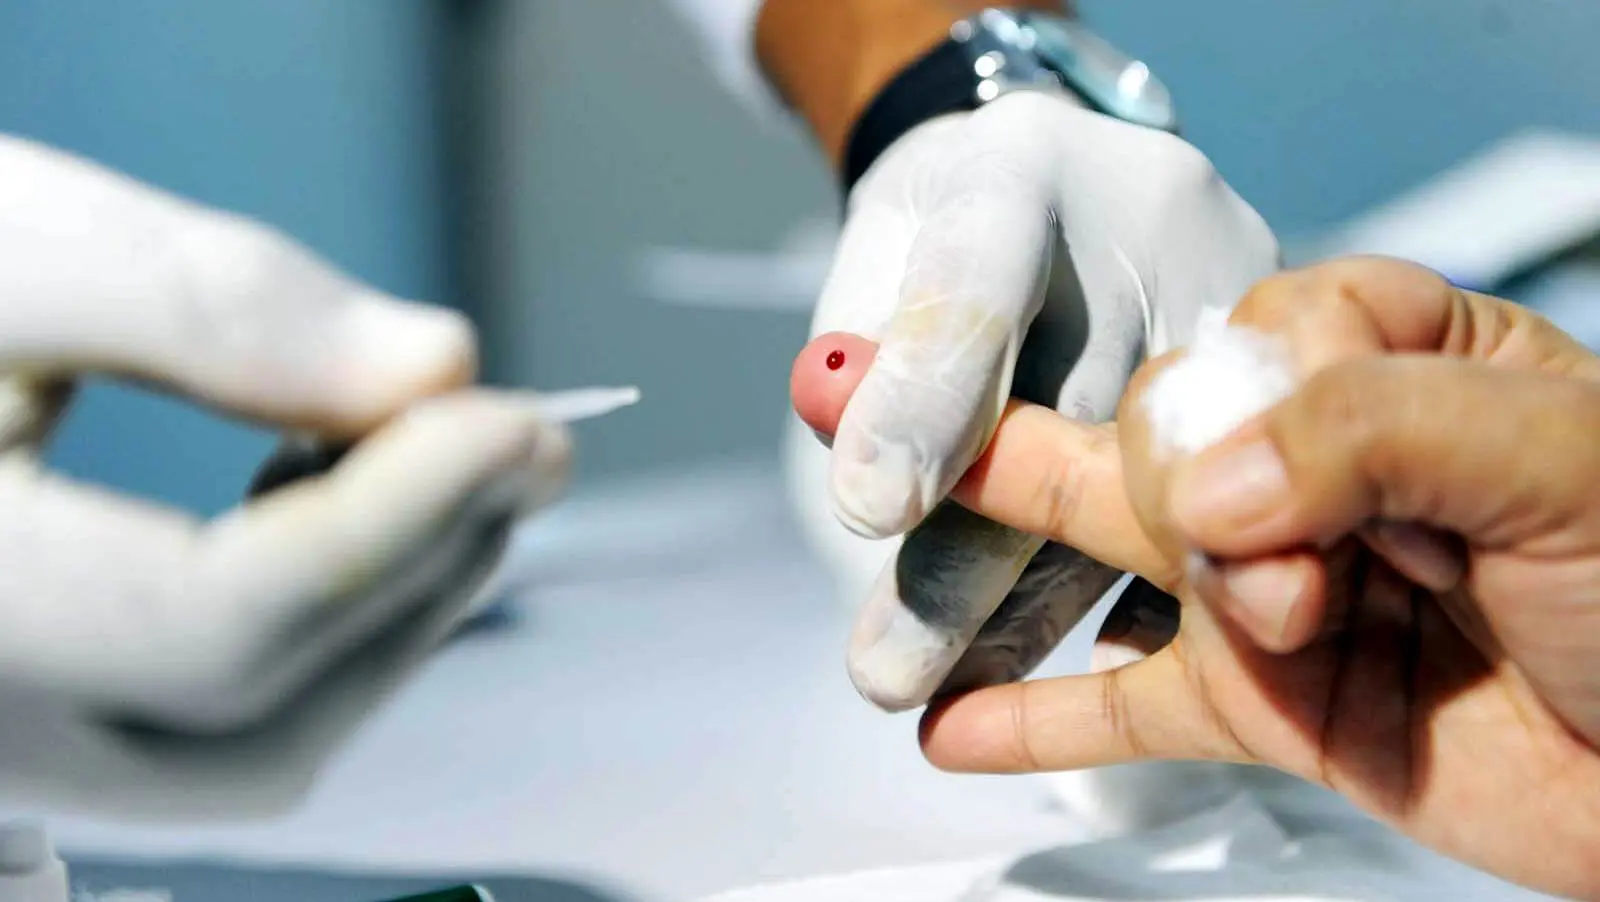 Rotary Clube de Caravaggio realiza testes rápidos de hepatites virais no próximo sábado